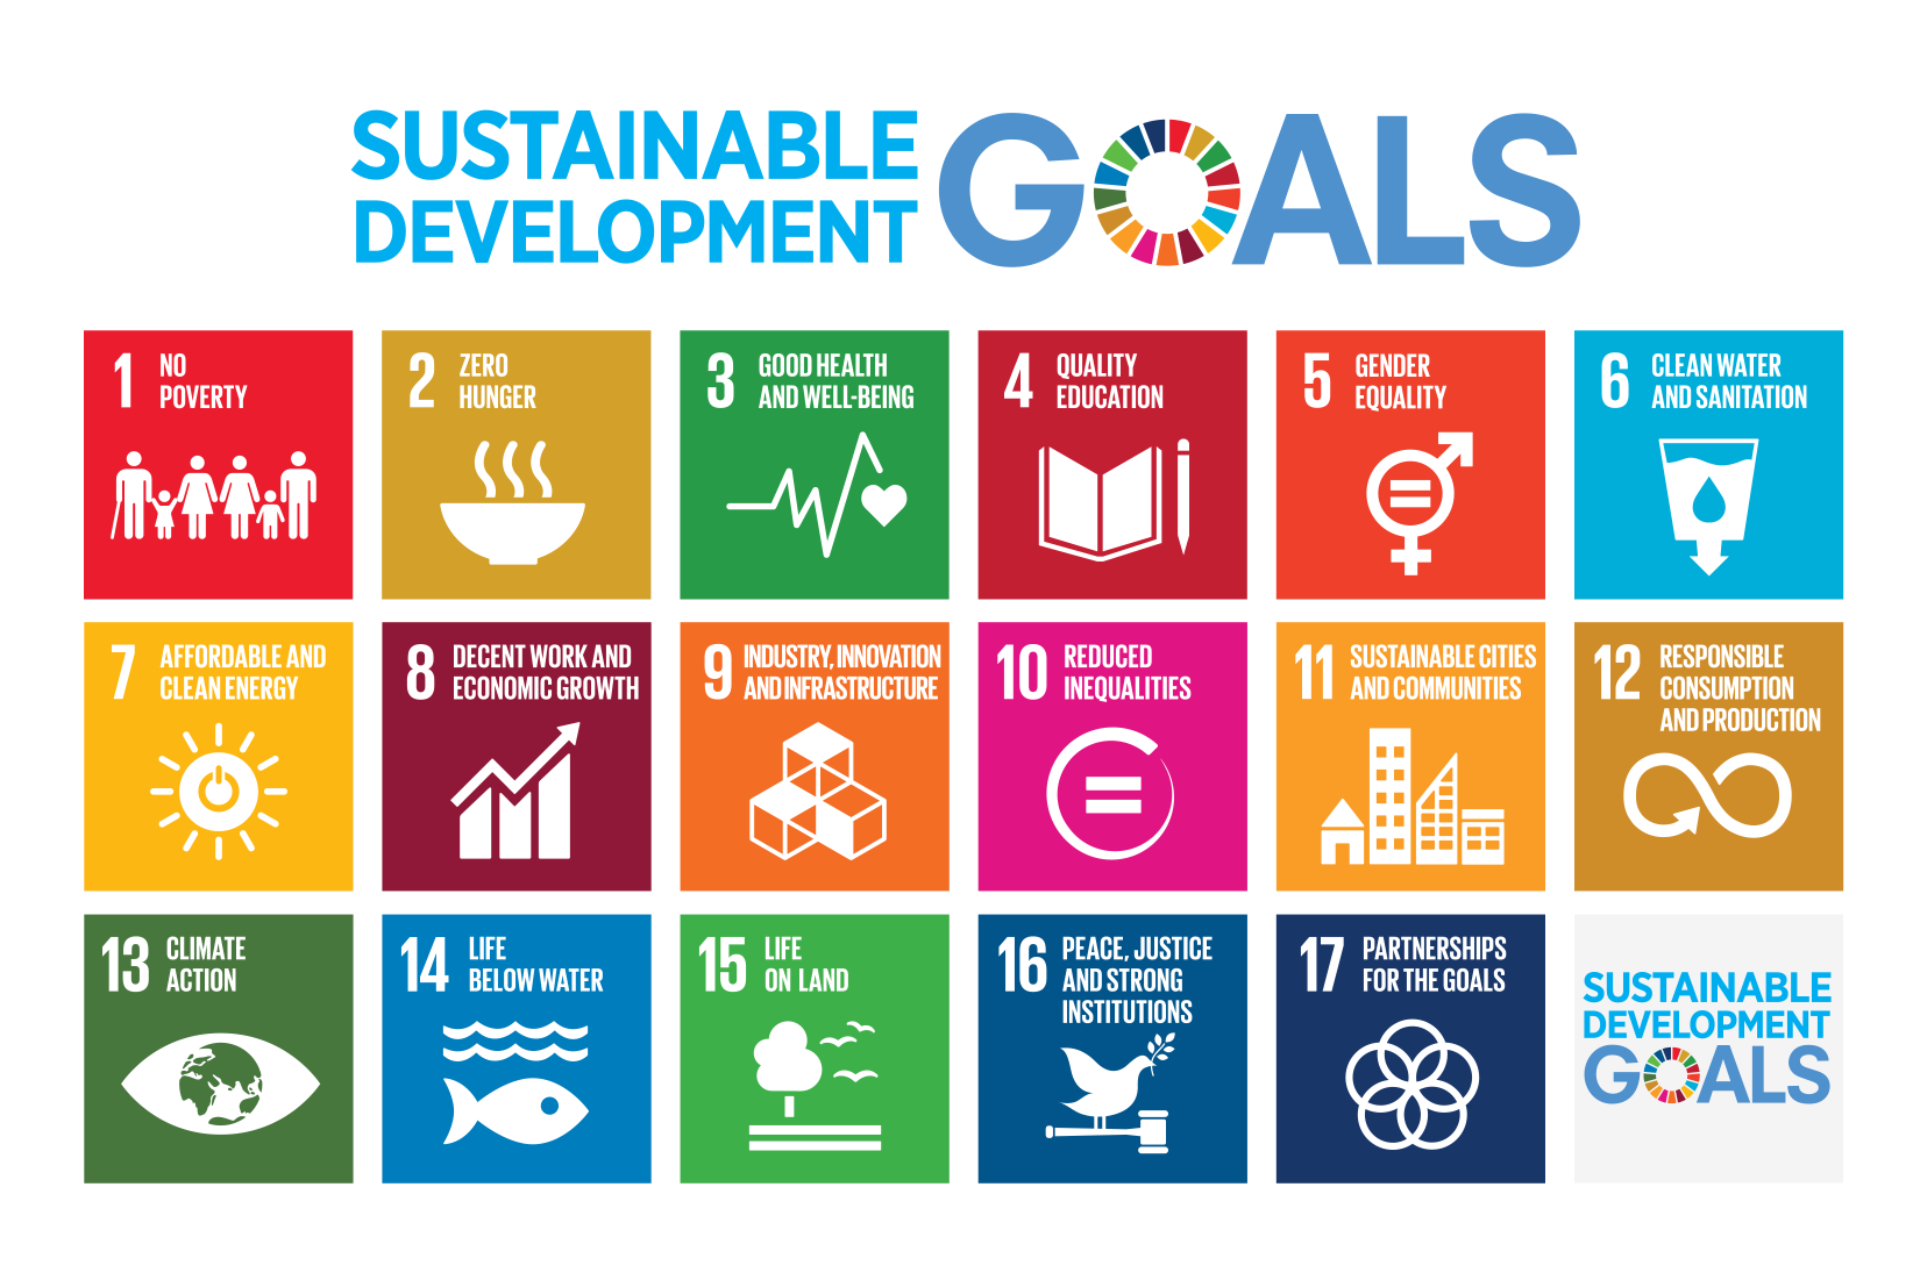 Цели оон 2015. Цели ООН В области устойчивого развития до 2030. 17 Целей устойчивого развития ООН. Цели устойчивого развития ООН 2015-2030. Цели устойчивого развития на период до 2030 года.